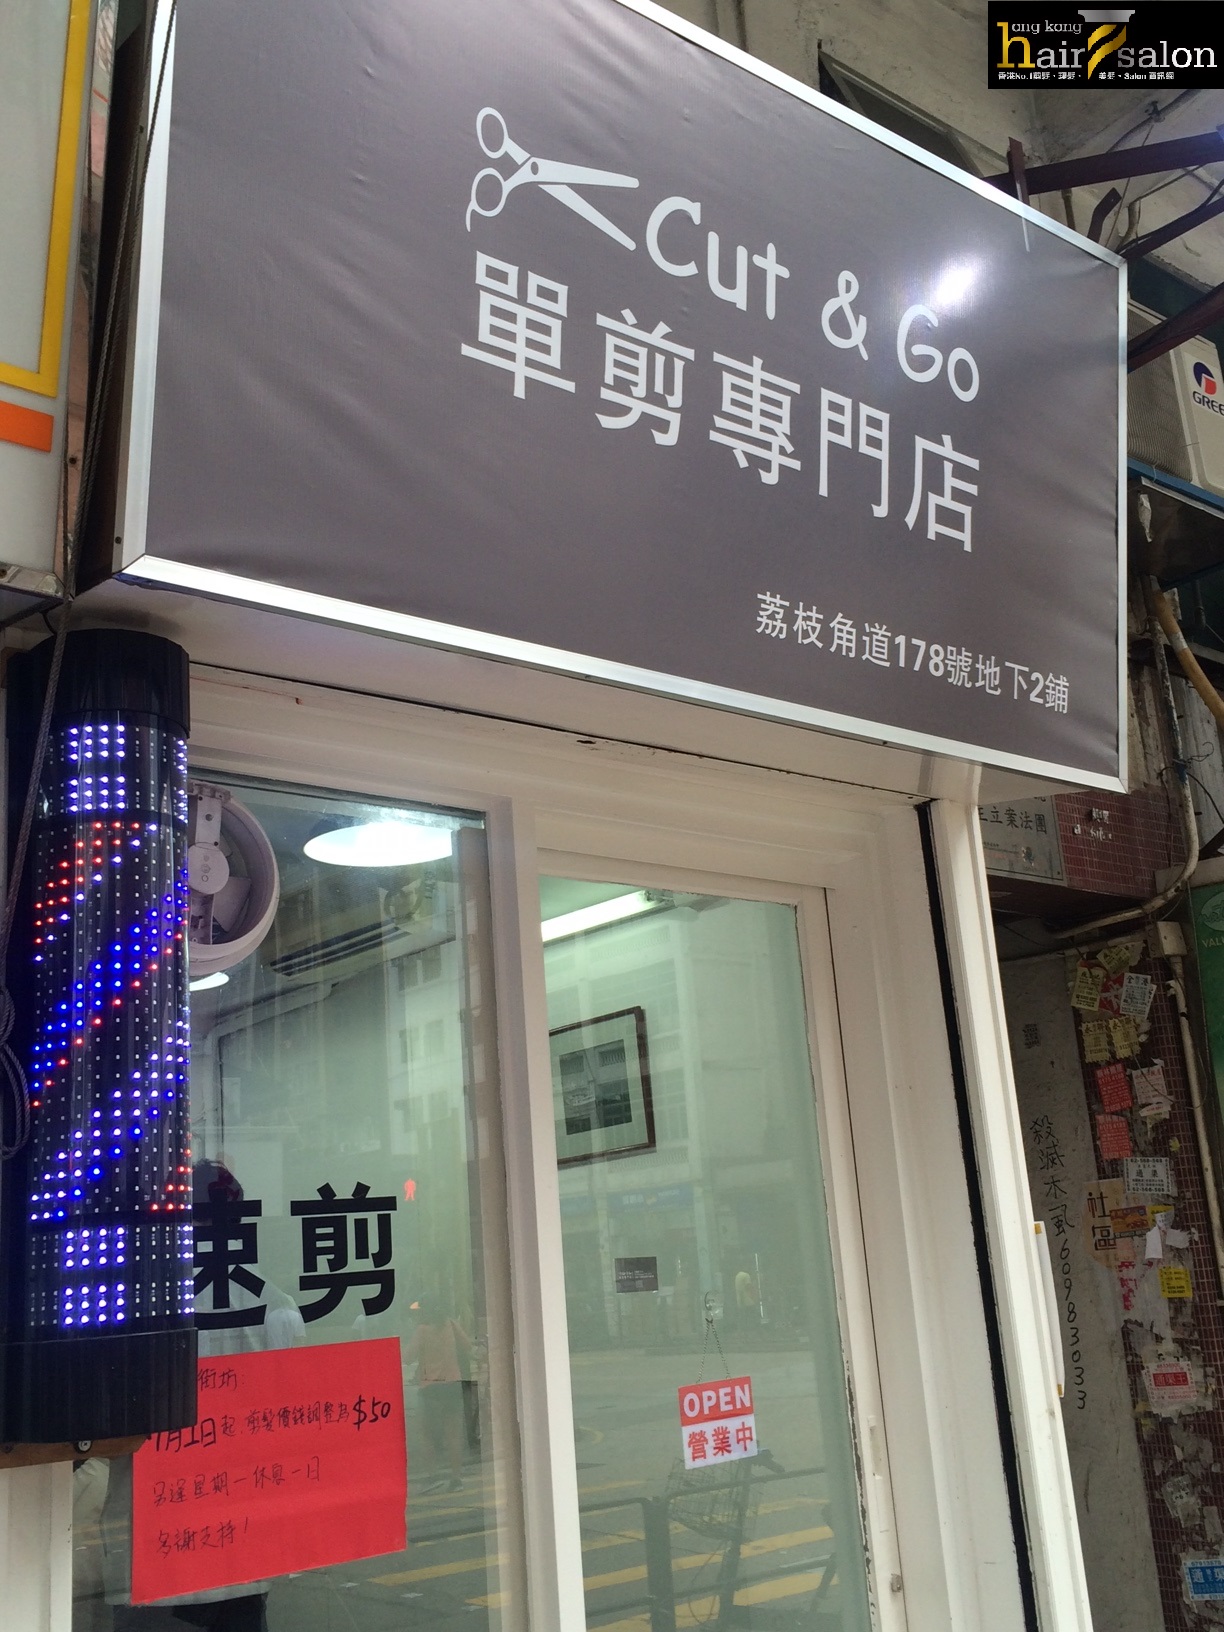 Haircut: Cut & Go 單剪專門店